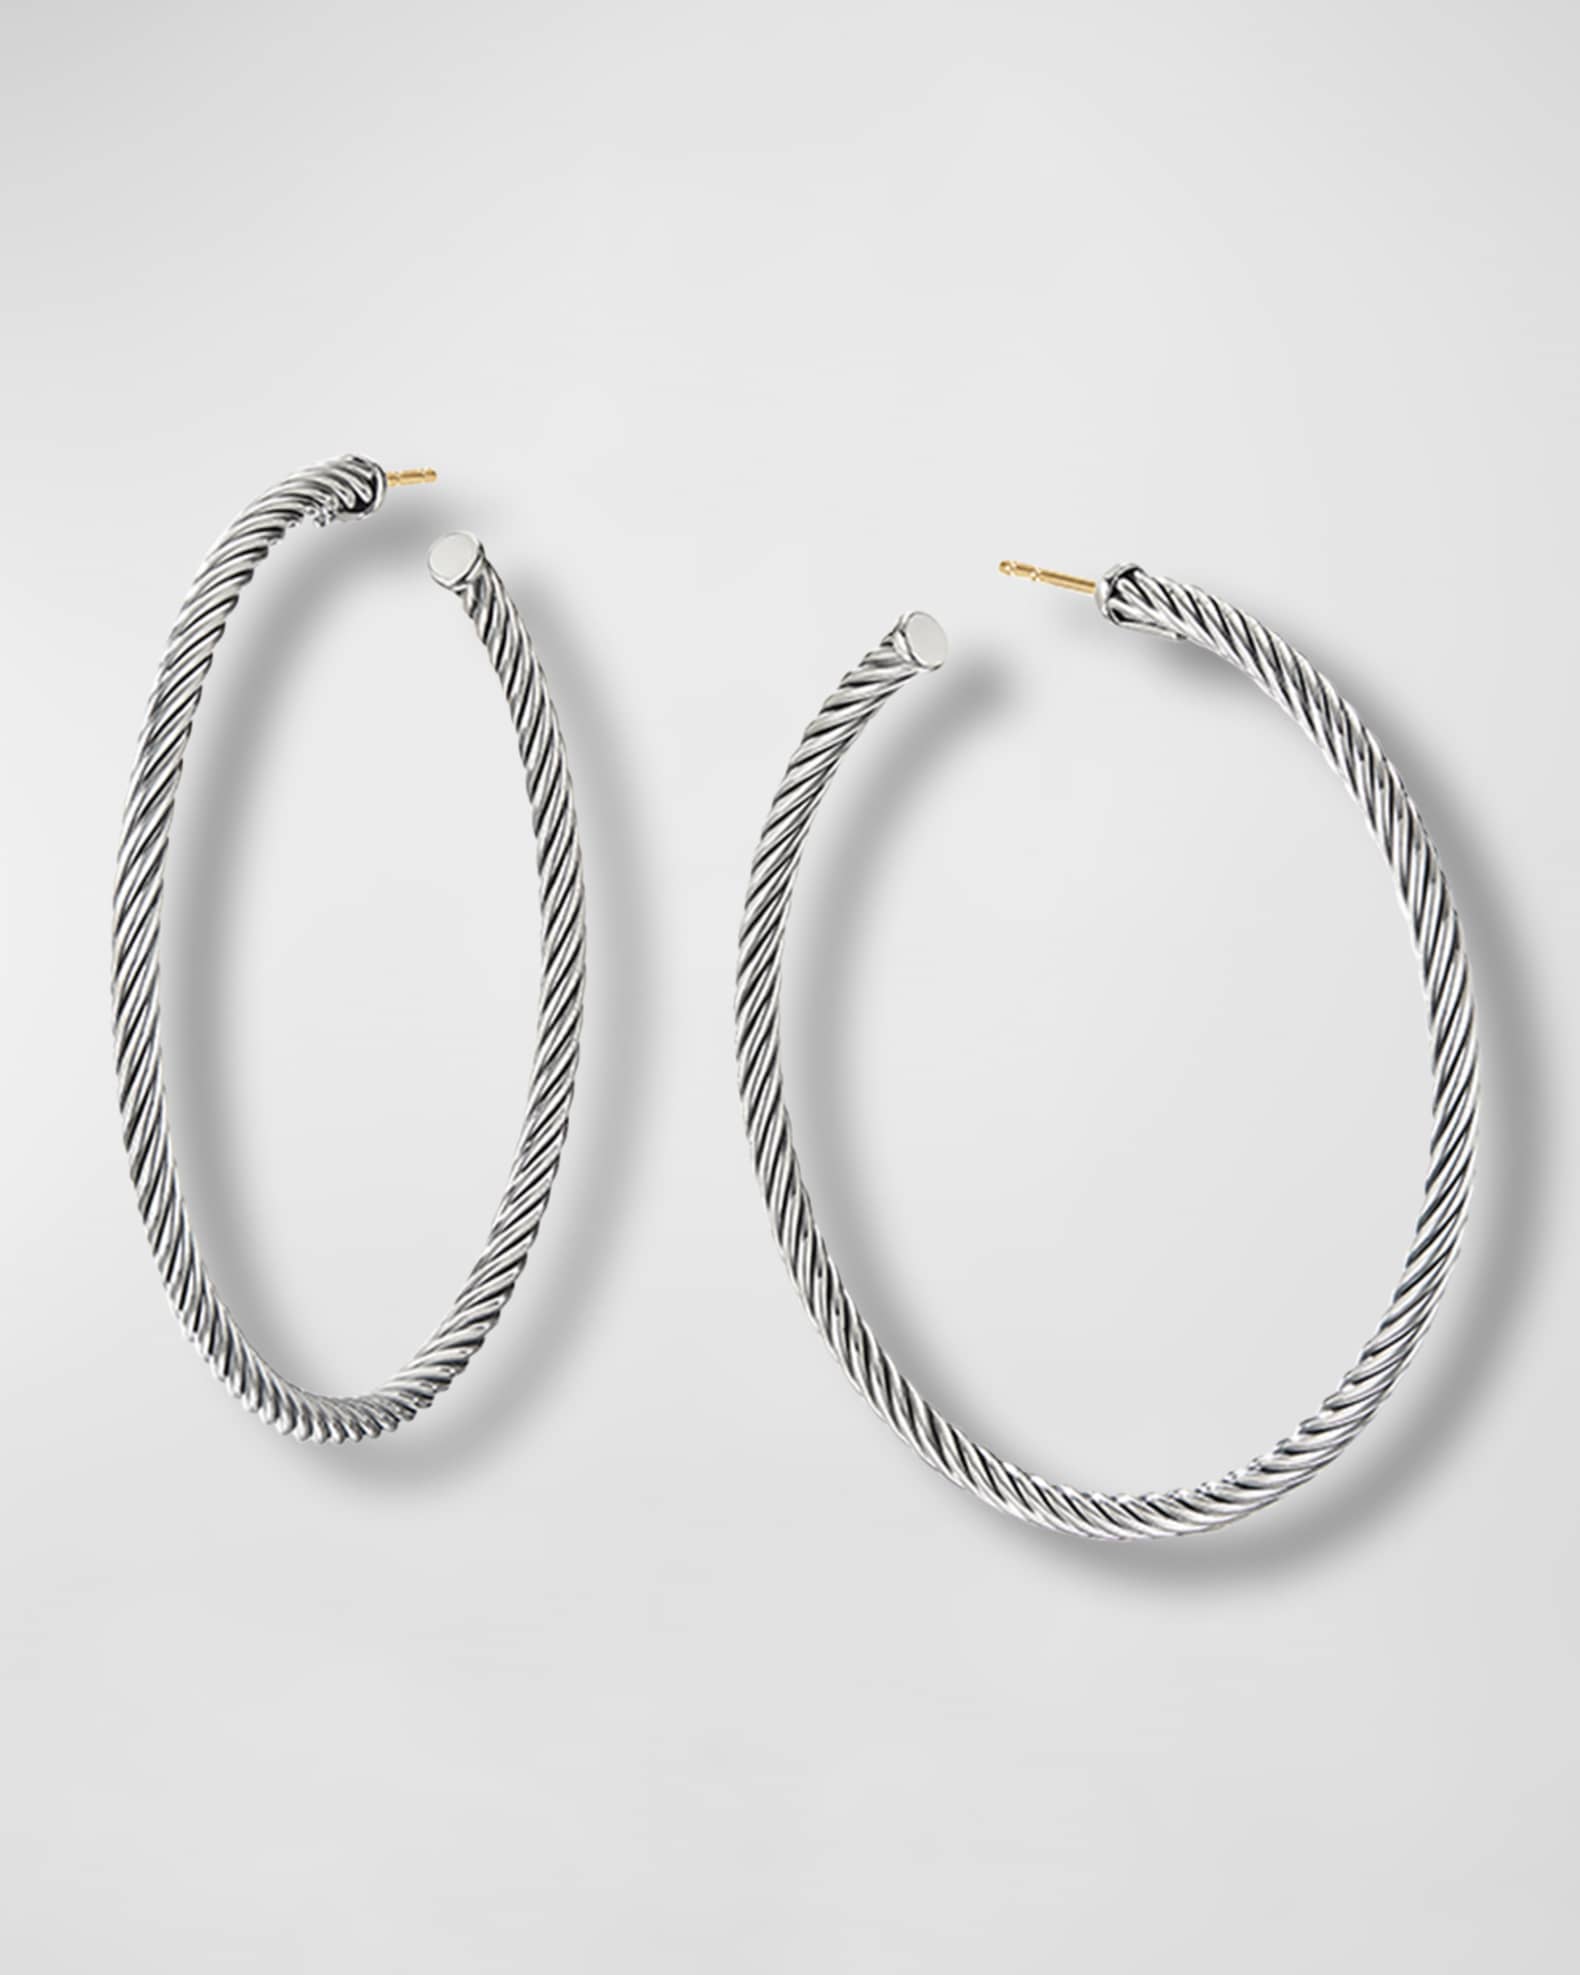 David Yurman Cablespira Hoop Earrings, 2